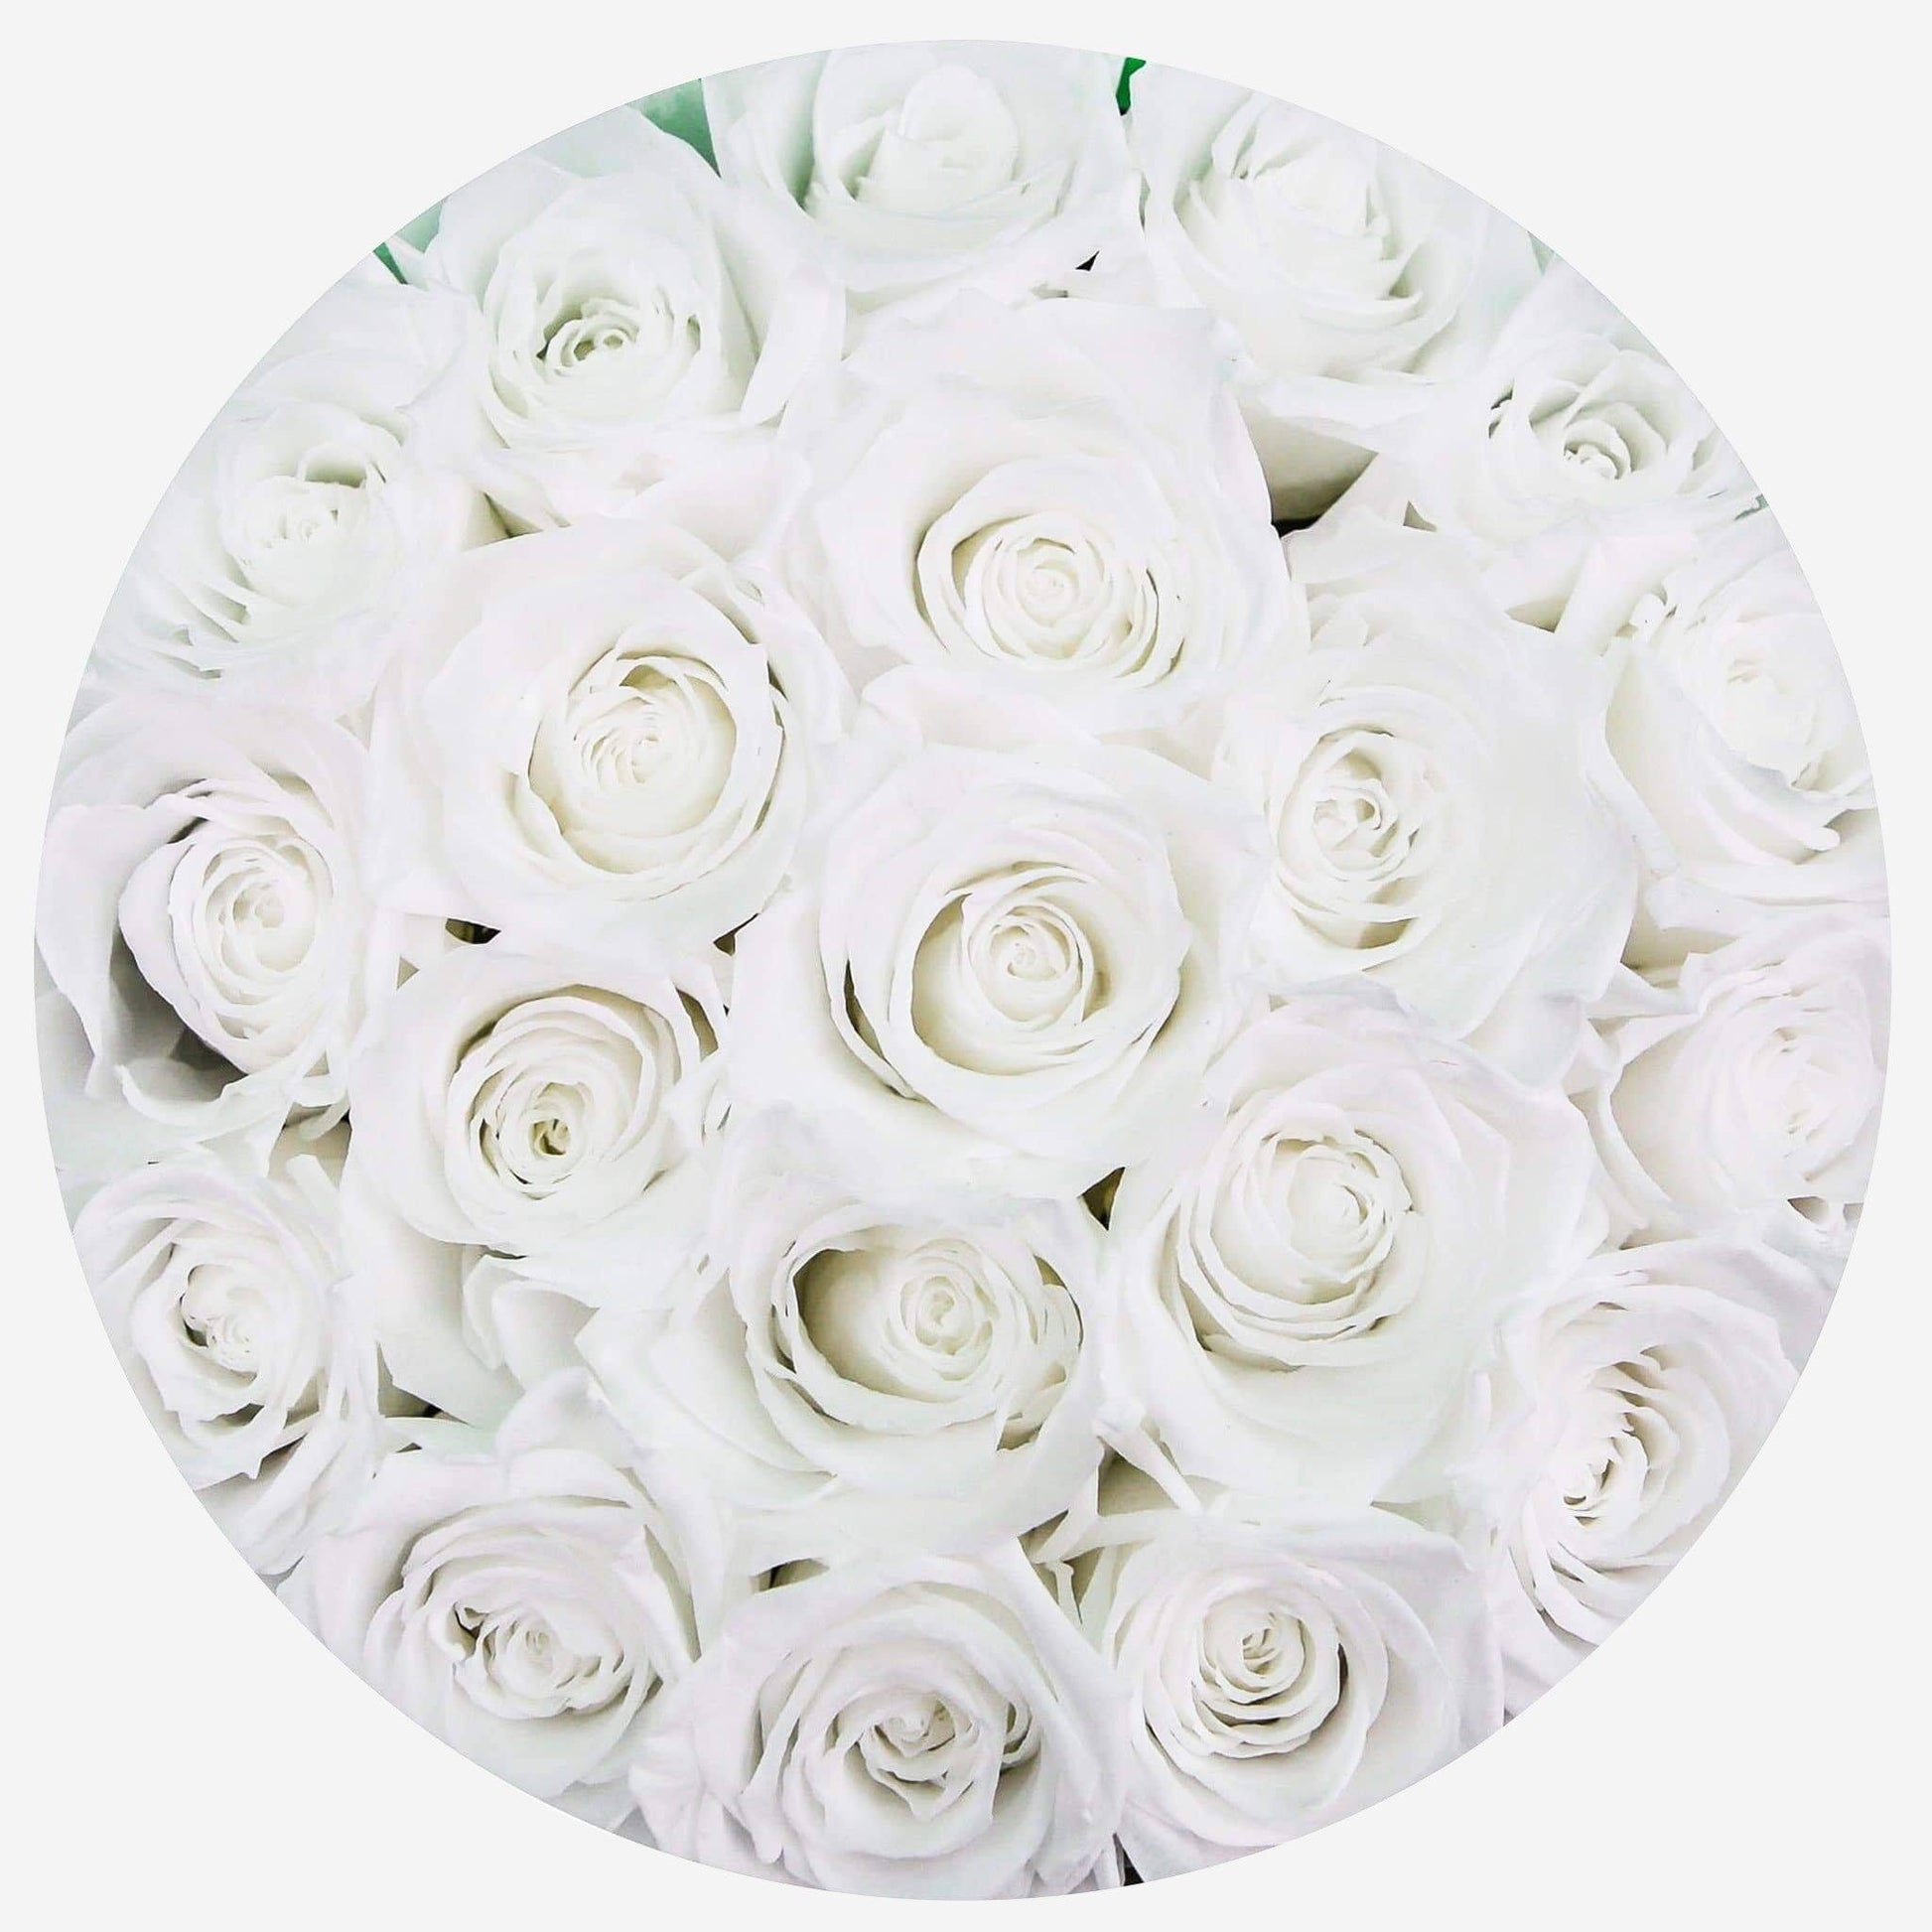 Classic White Box | White Roses - The Million Roses